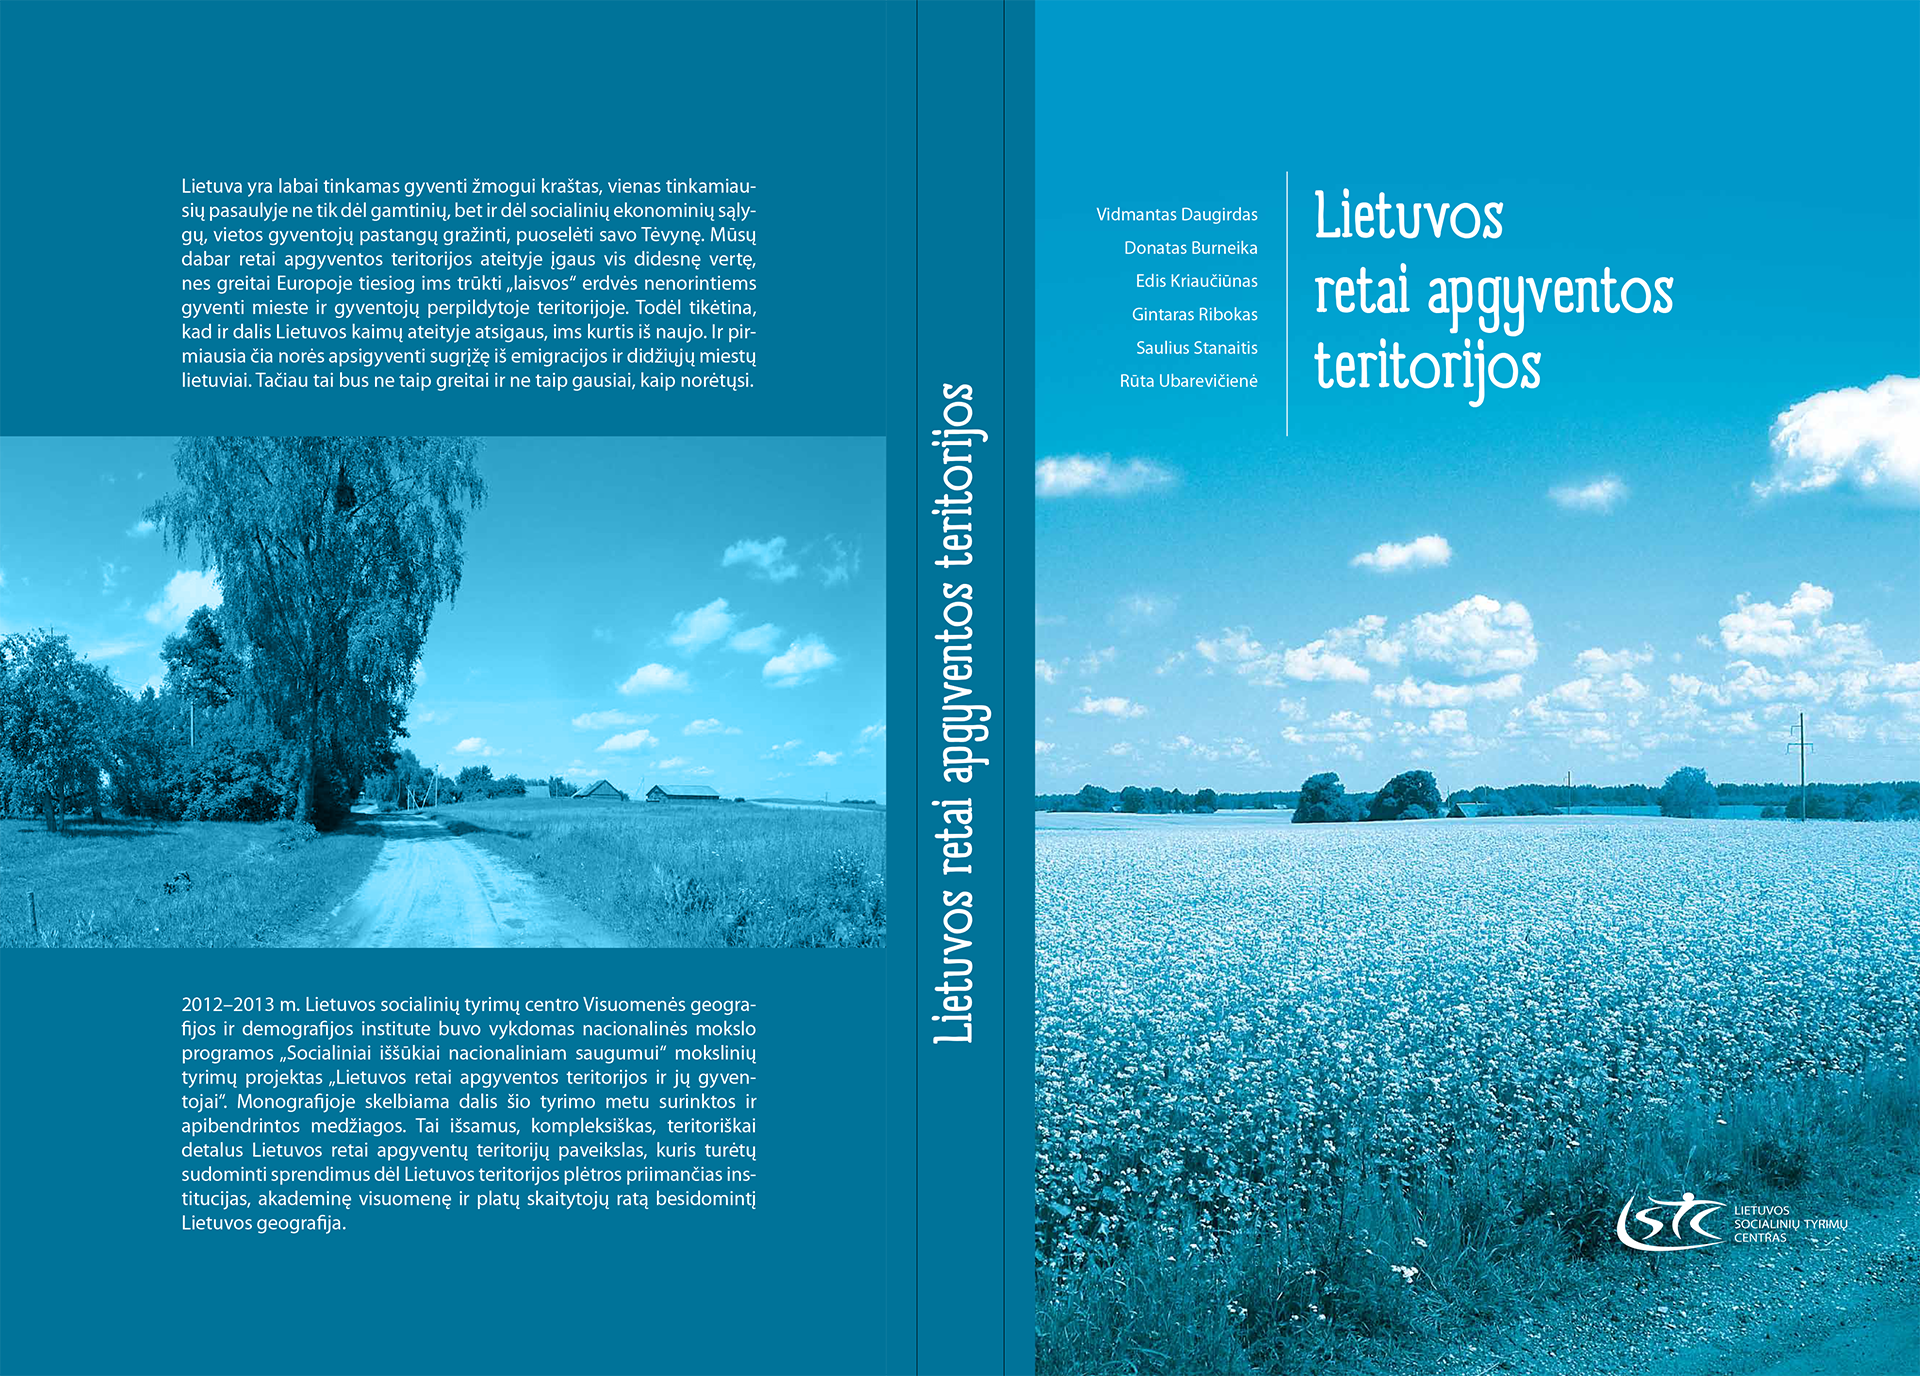 Cover photo of a book Lietuvos Retai Apgyvendintos Teritorijos